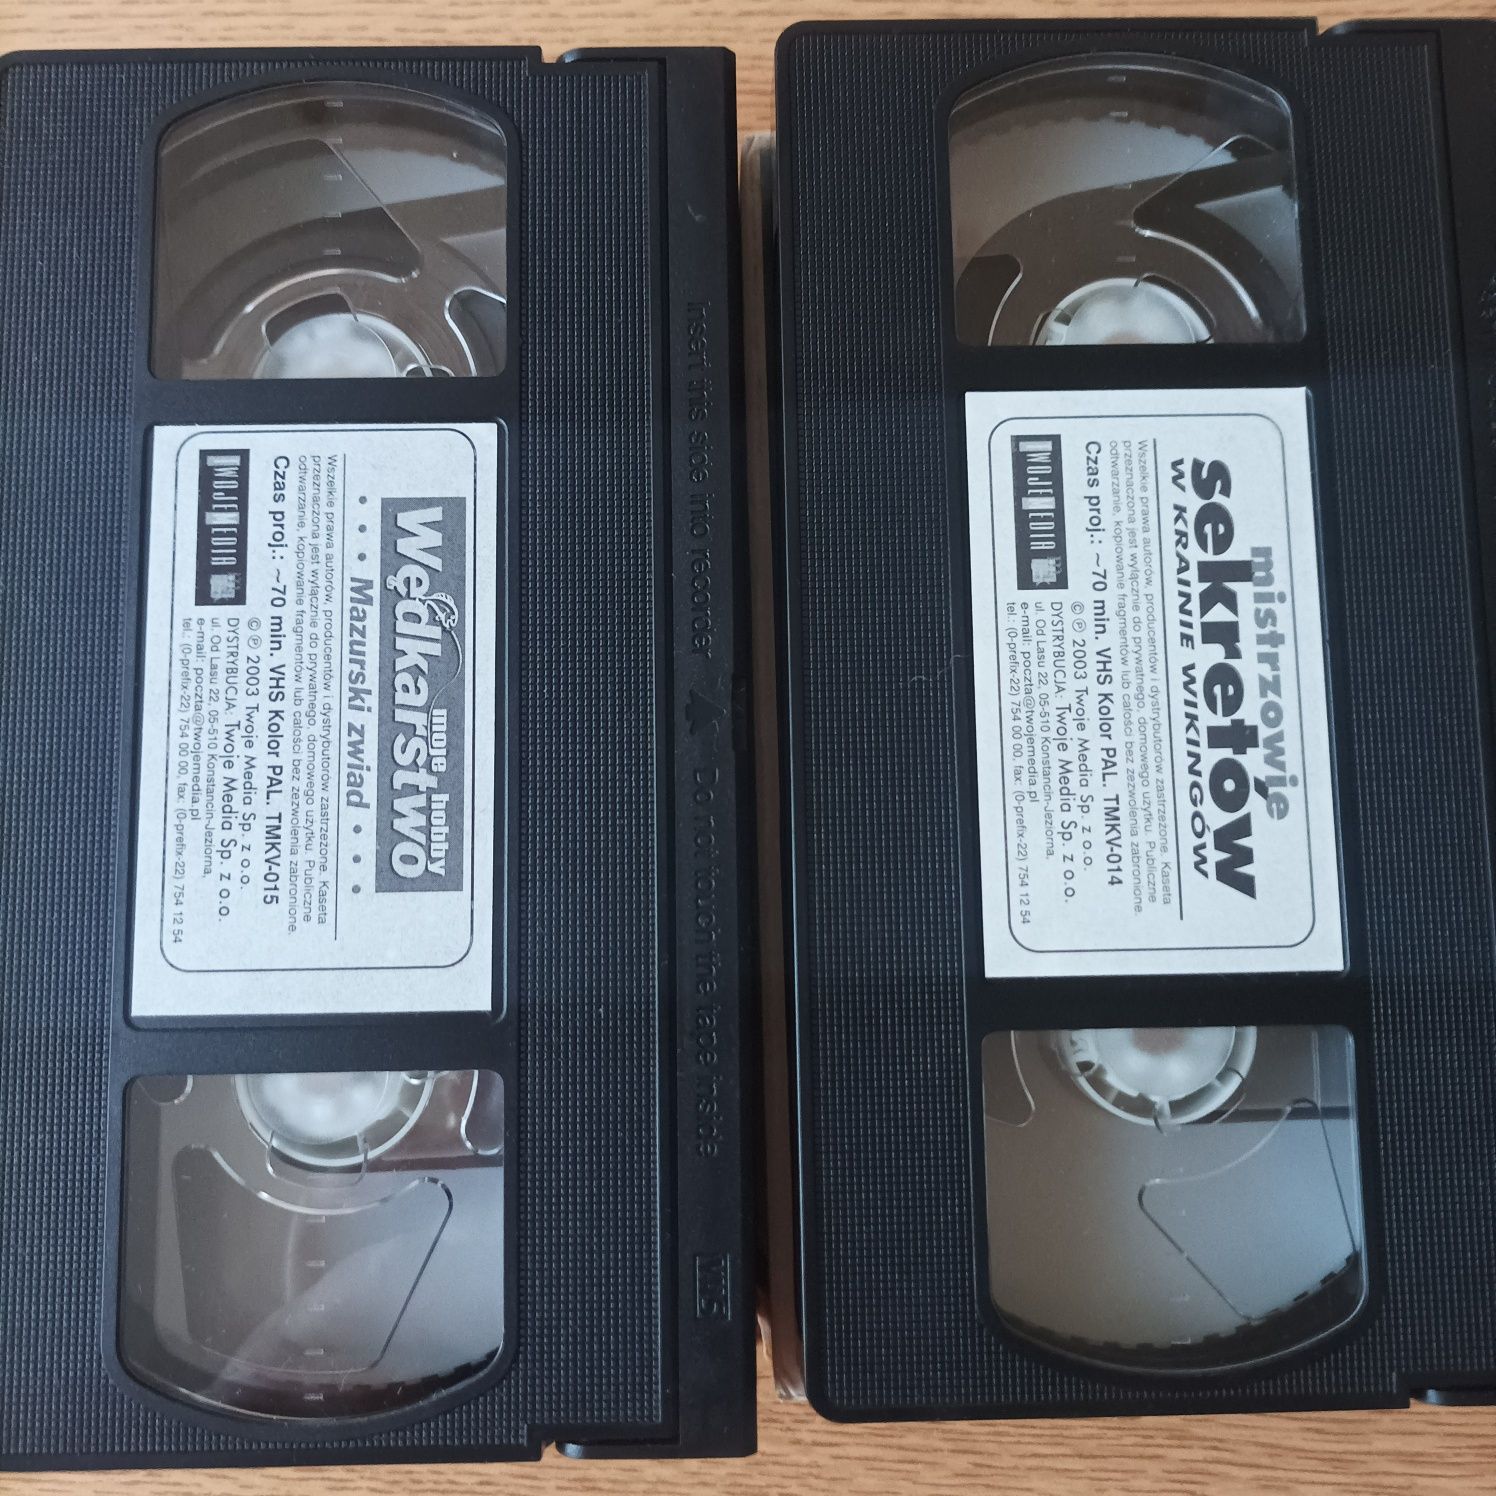 Filmy wędkarskie na kasetach VHS 2 sztuki